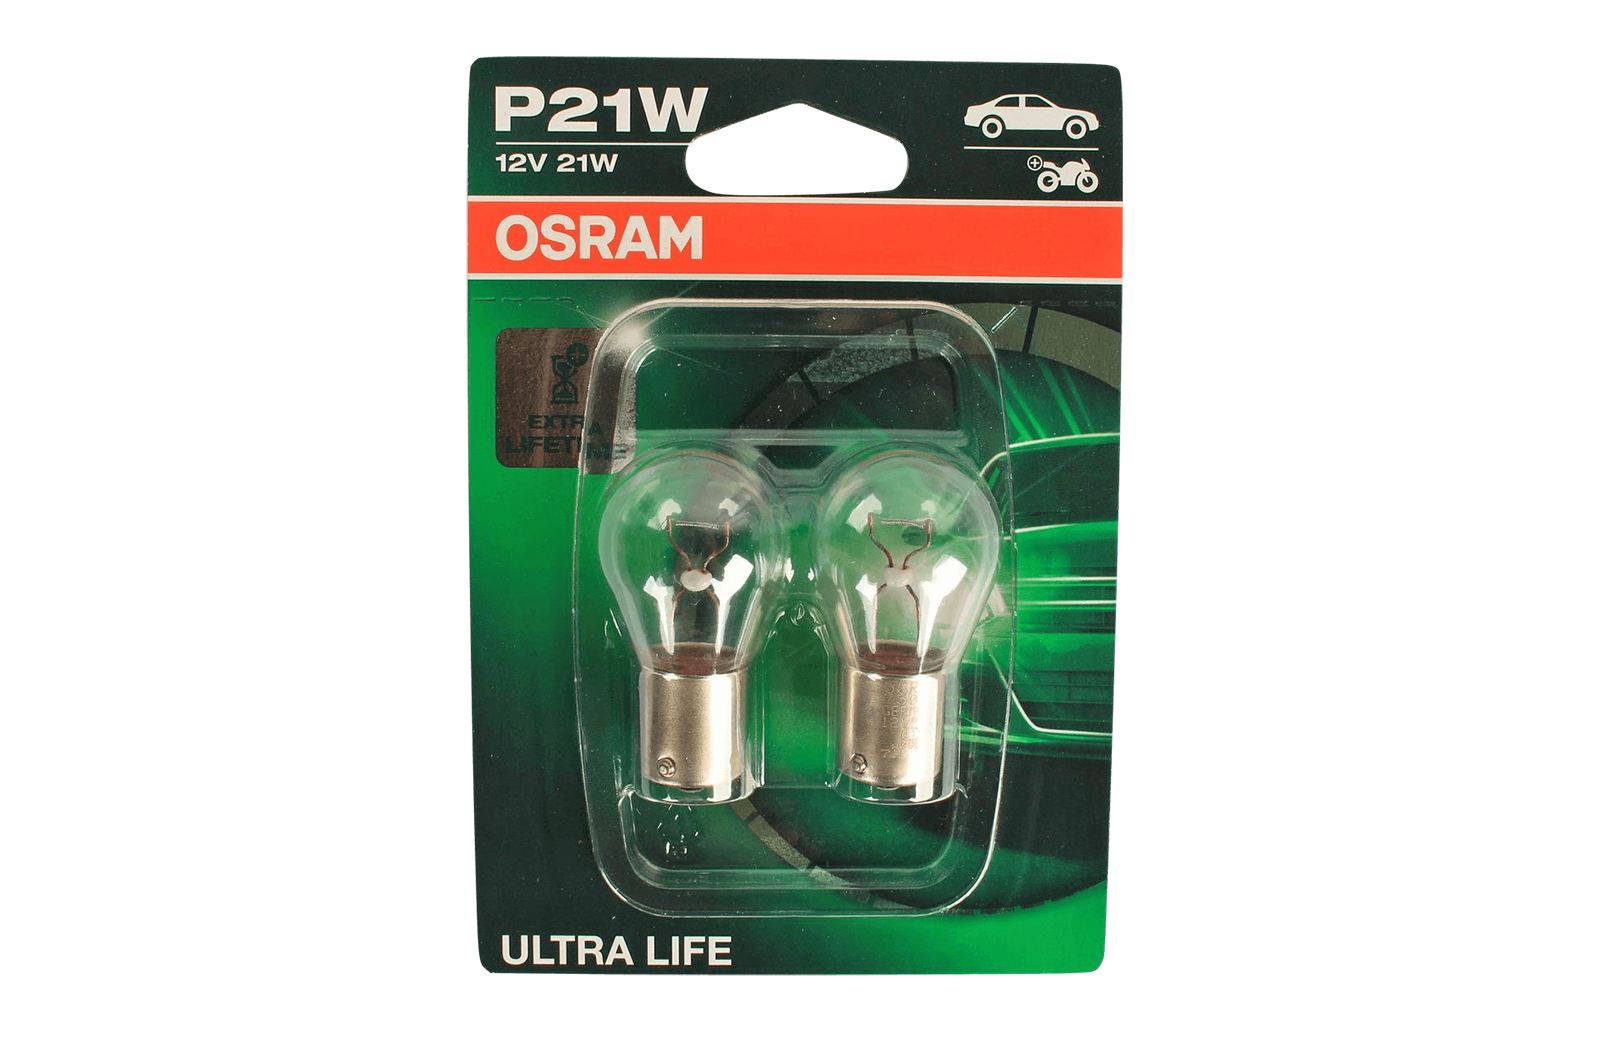 Лампа 12V P21W OSRAM ULTRA LIFE 2 штуки блистер фотография №1